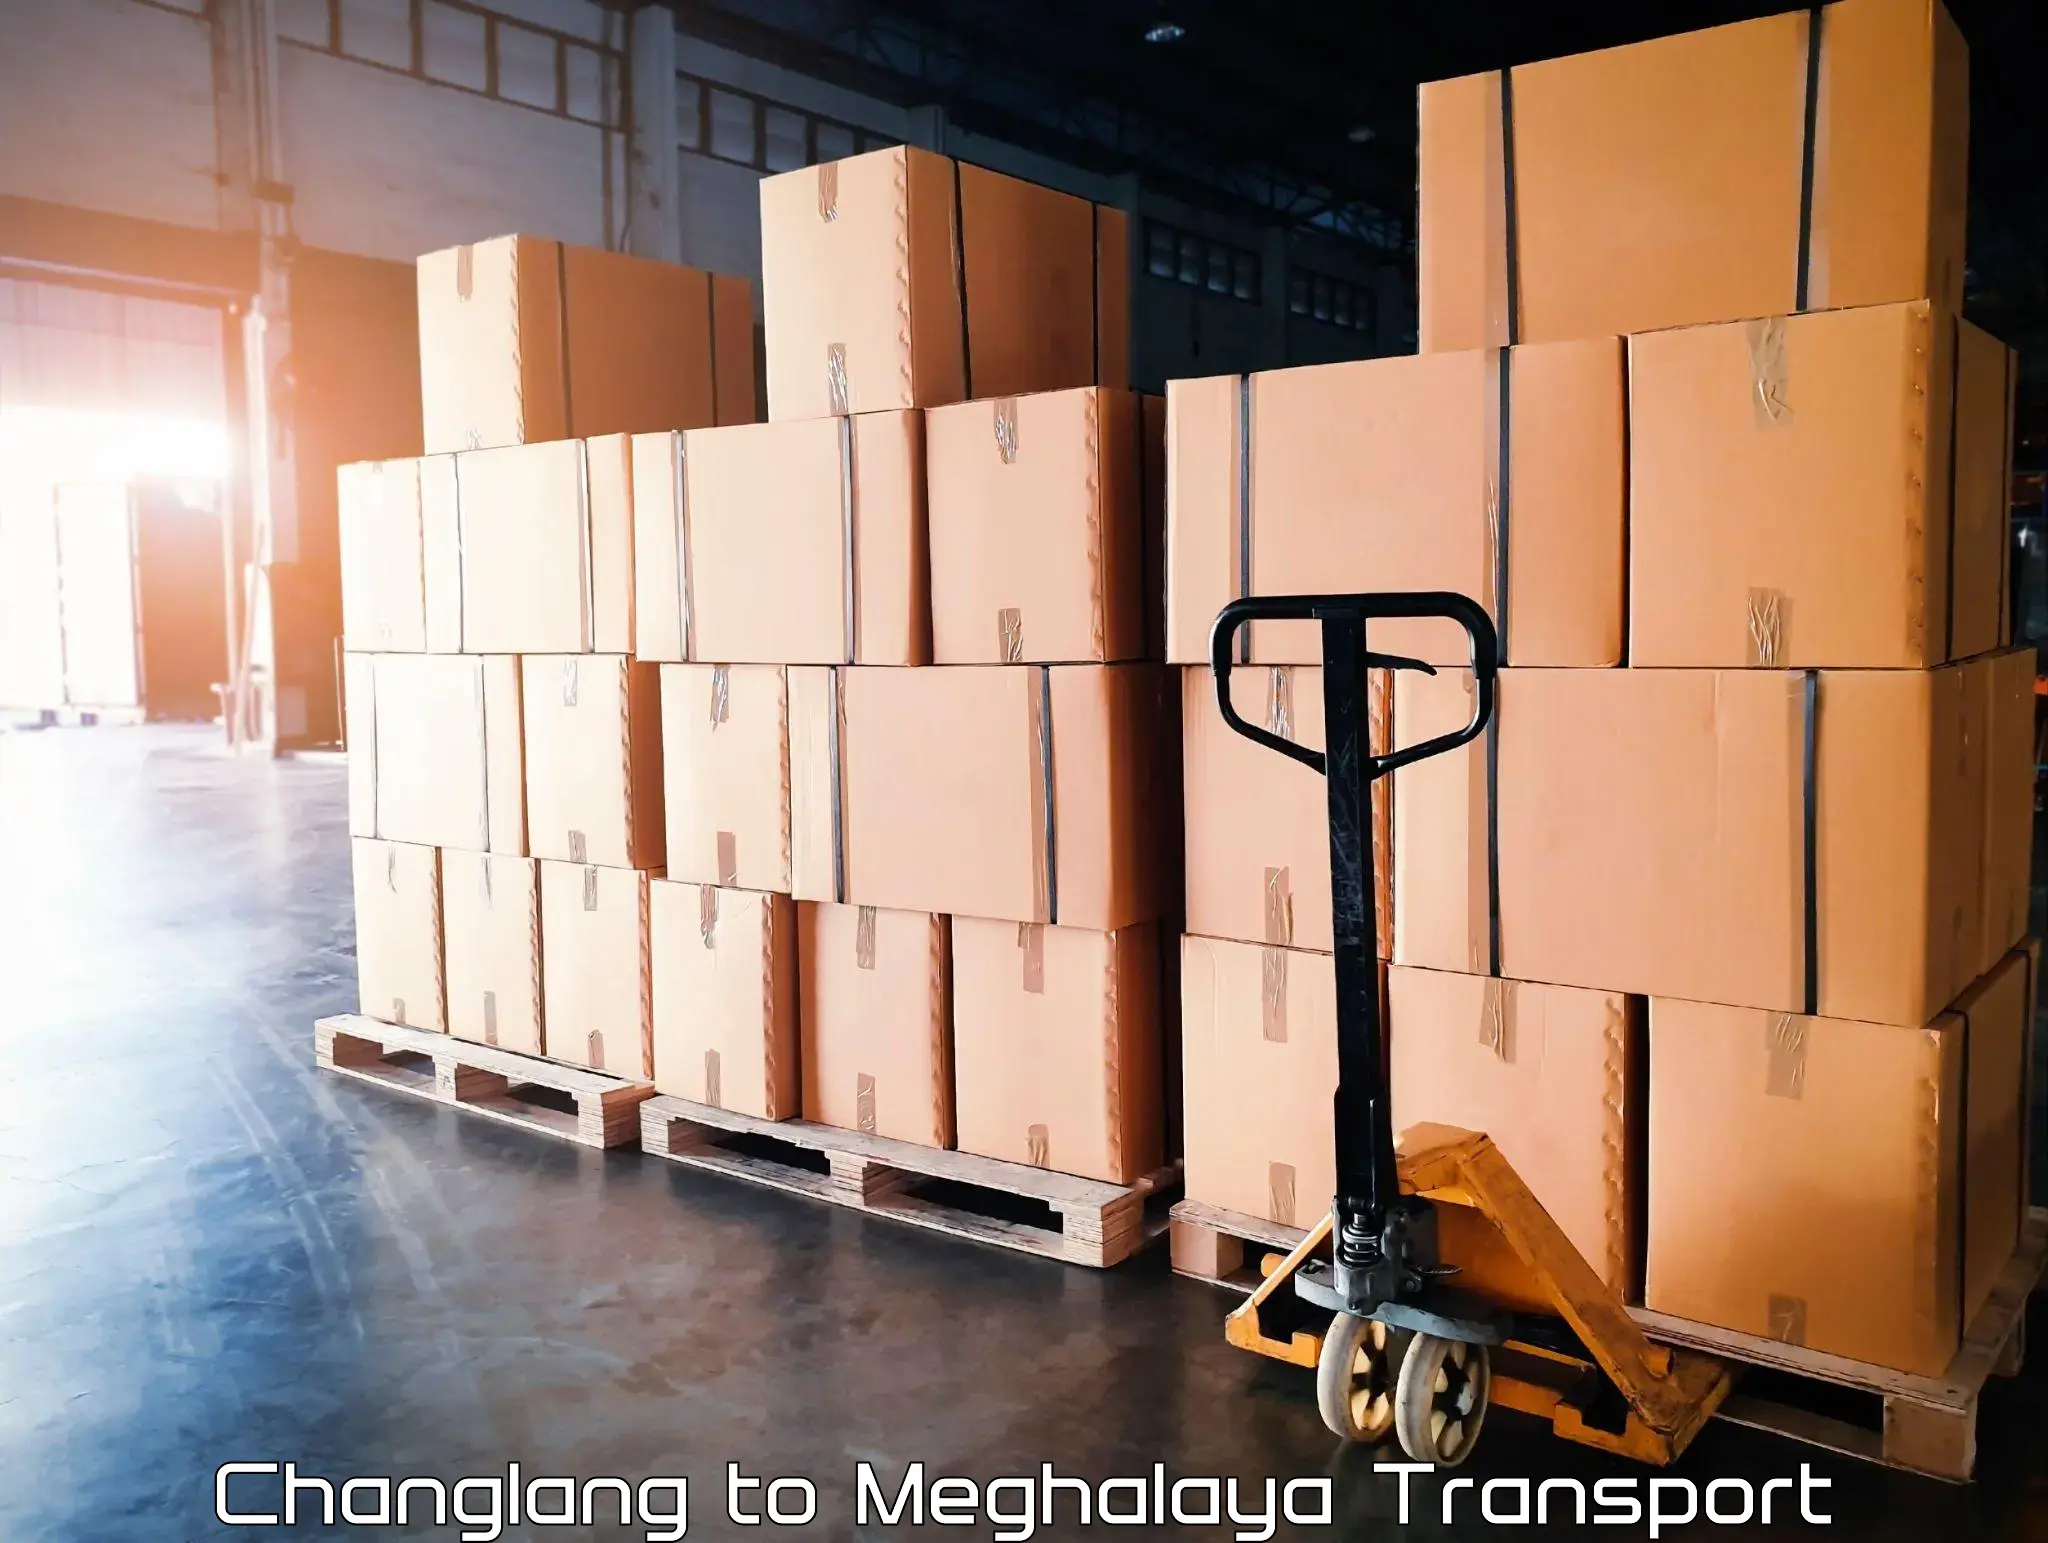 Transport in sharing Changlang to Meghalaya